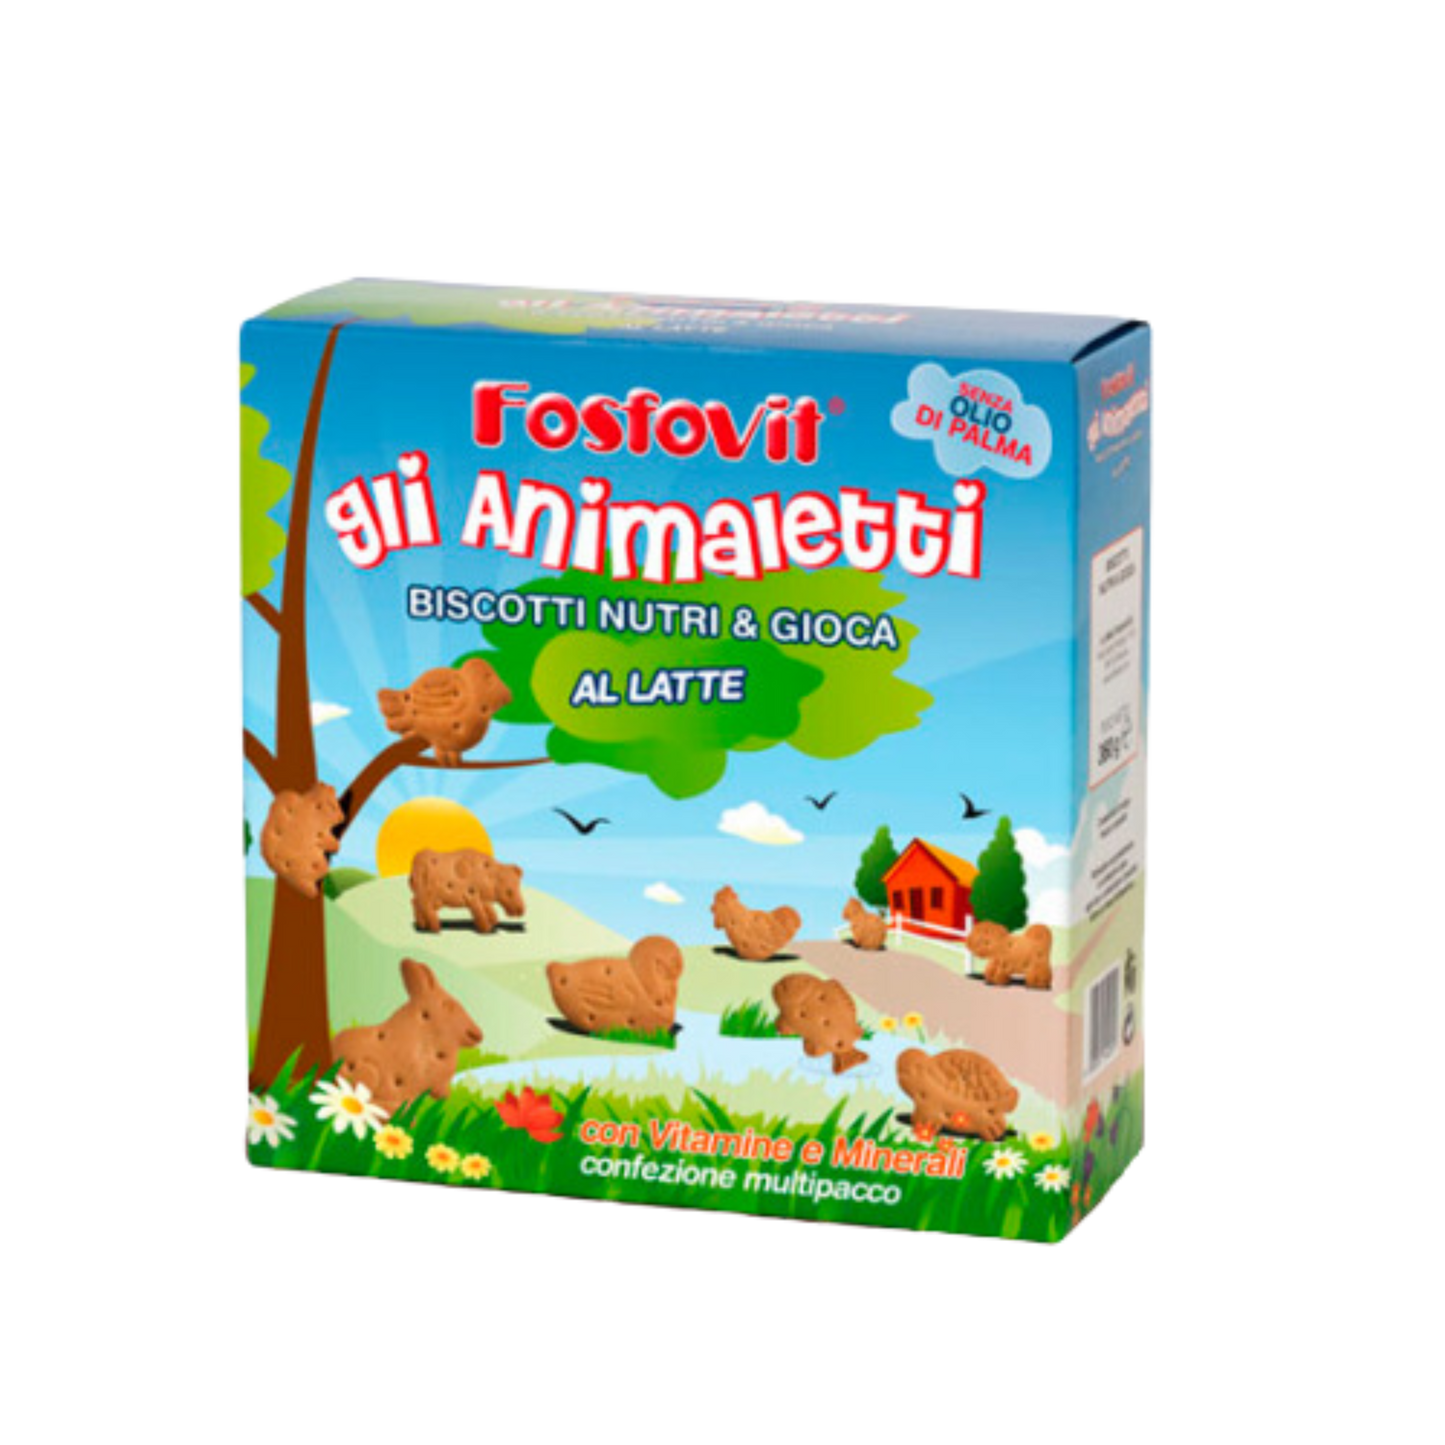 Gli Animaletti al Latte - Junior Animal Milk Biscuits 200g